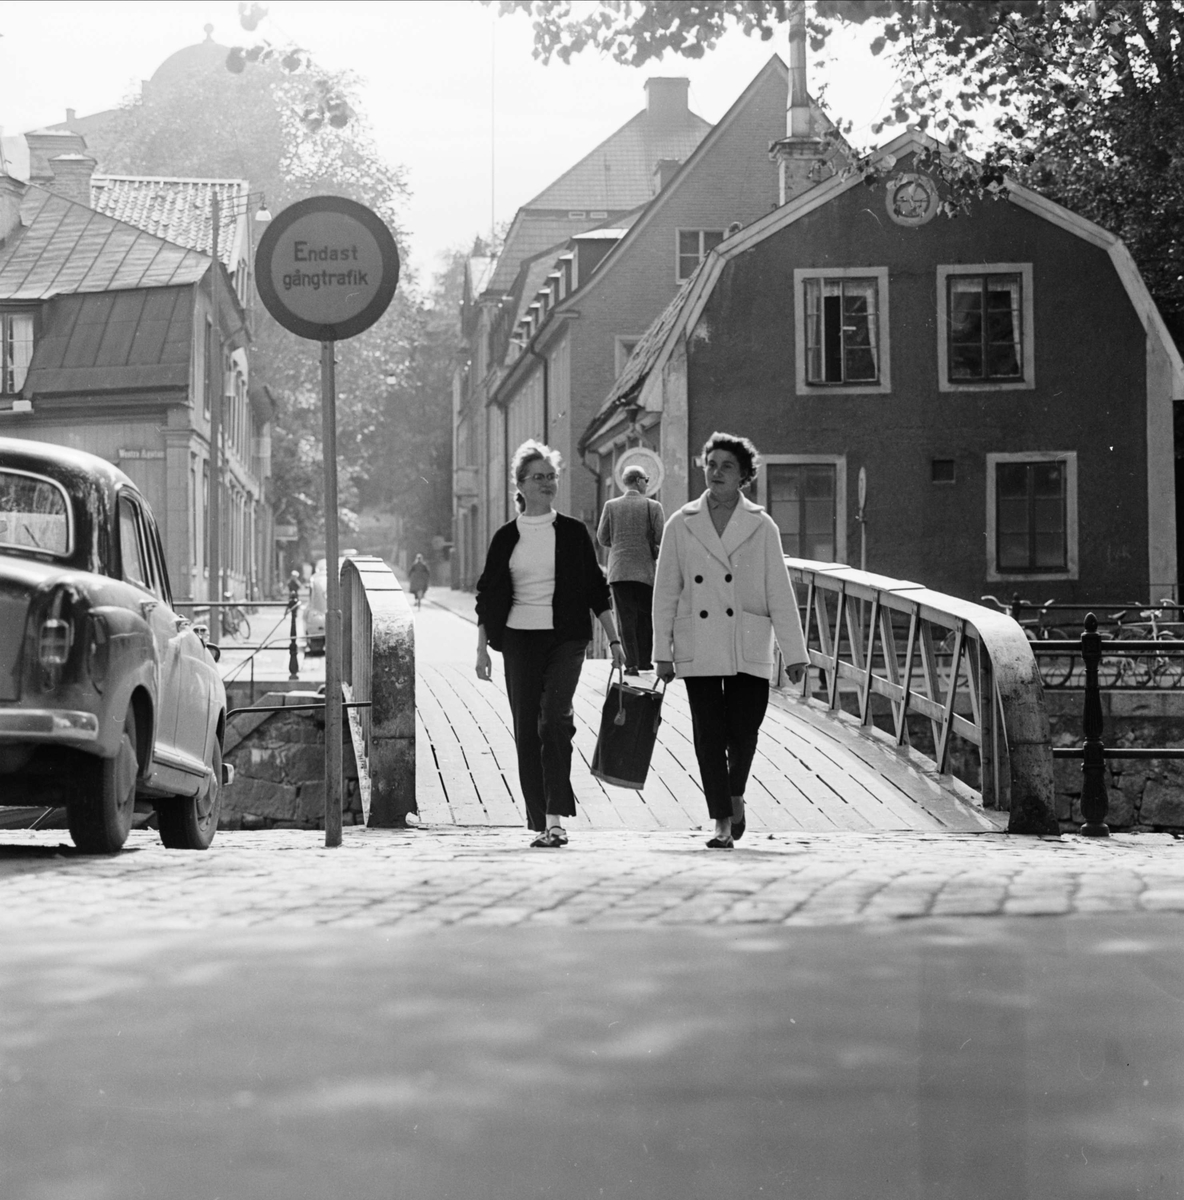 "Studentliv i Uppsala", september 1956